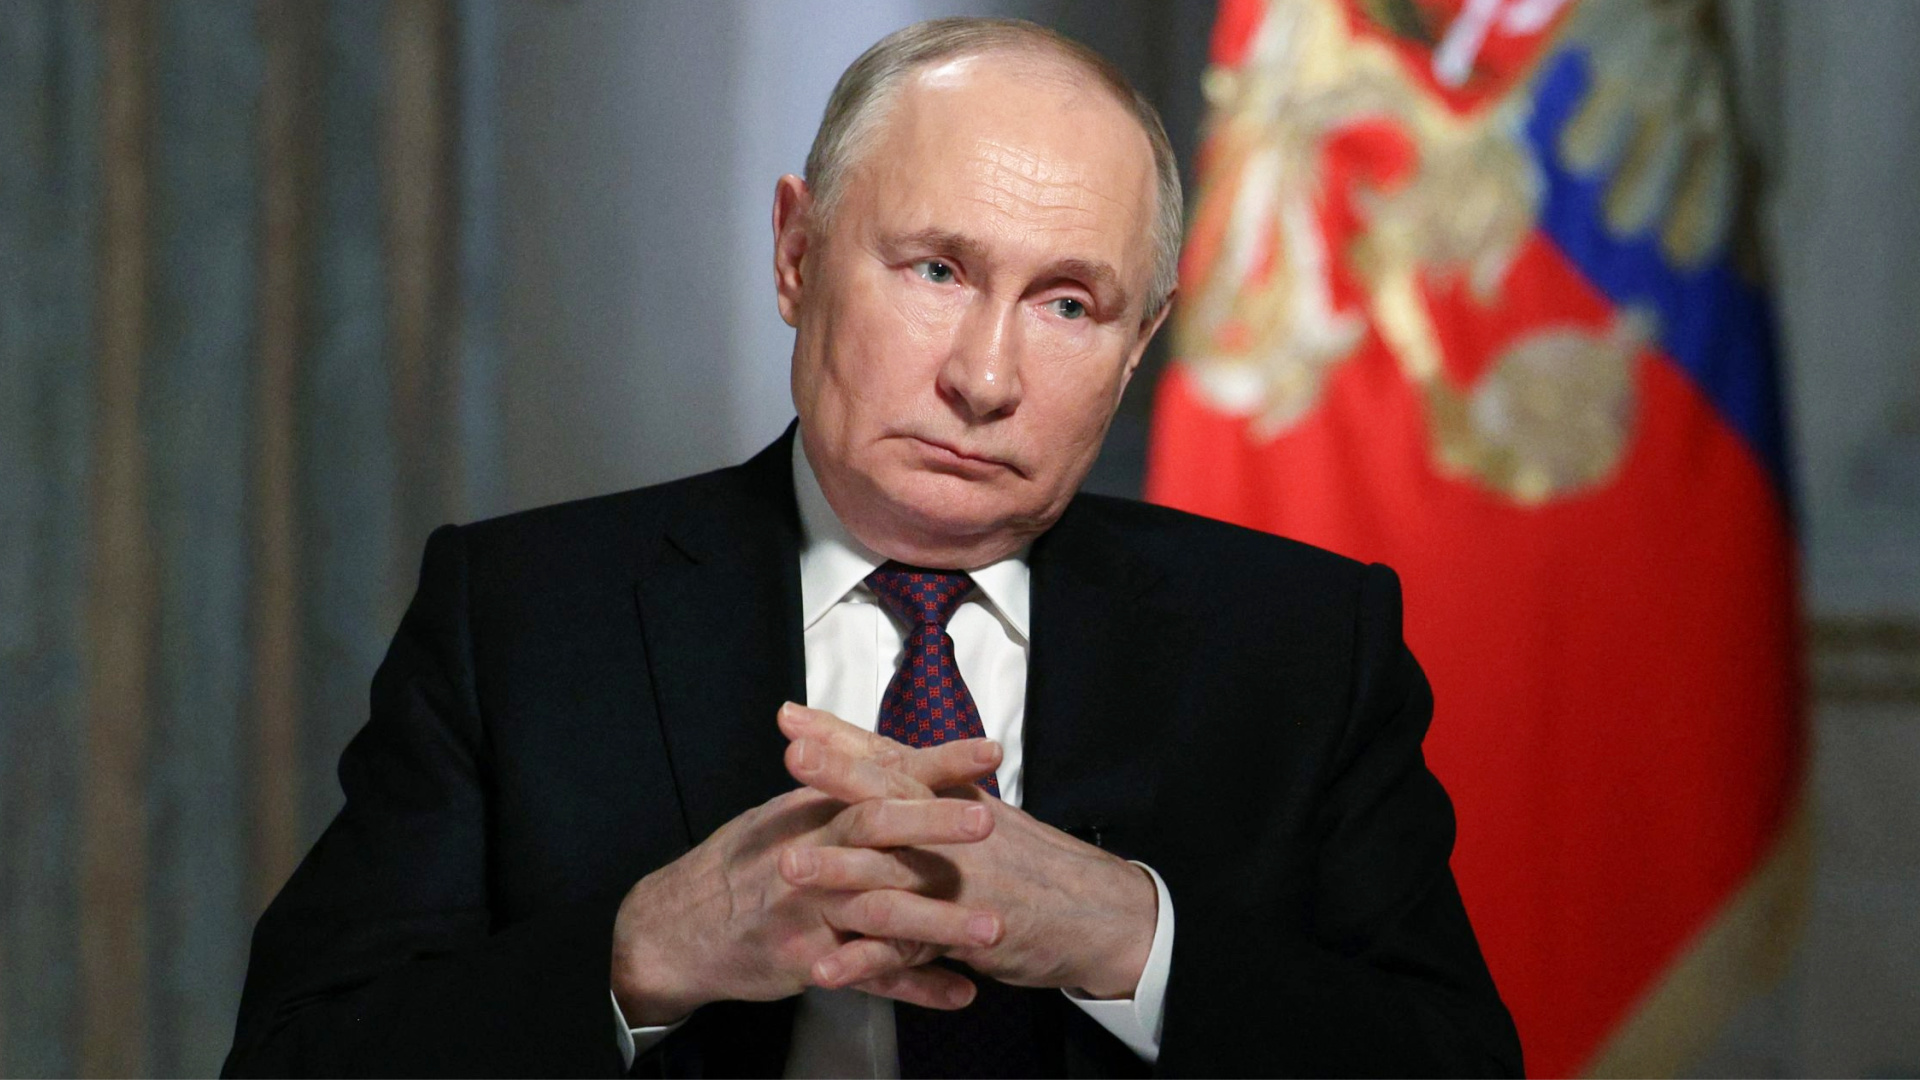 Putin's latest threat escalates tensions: Russia targets Argentina